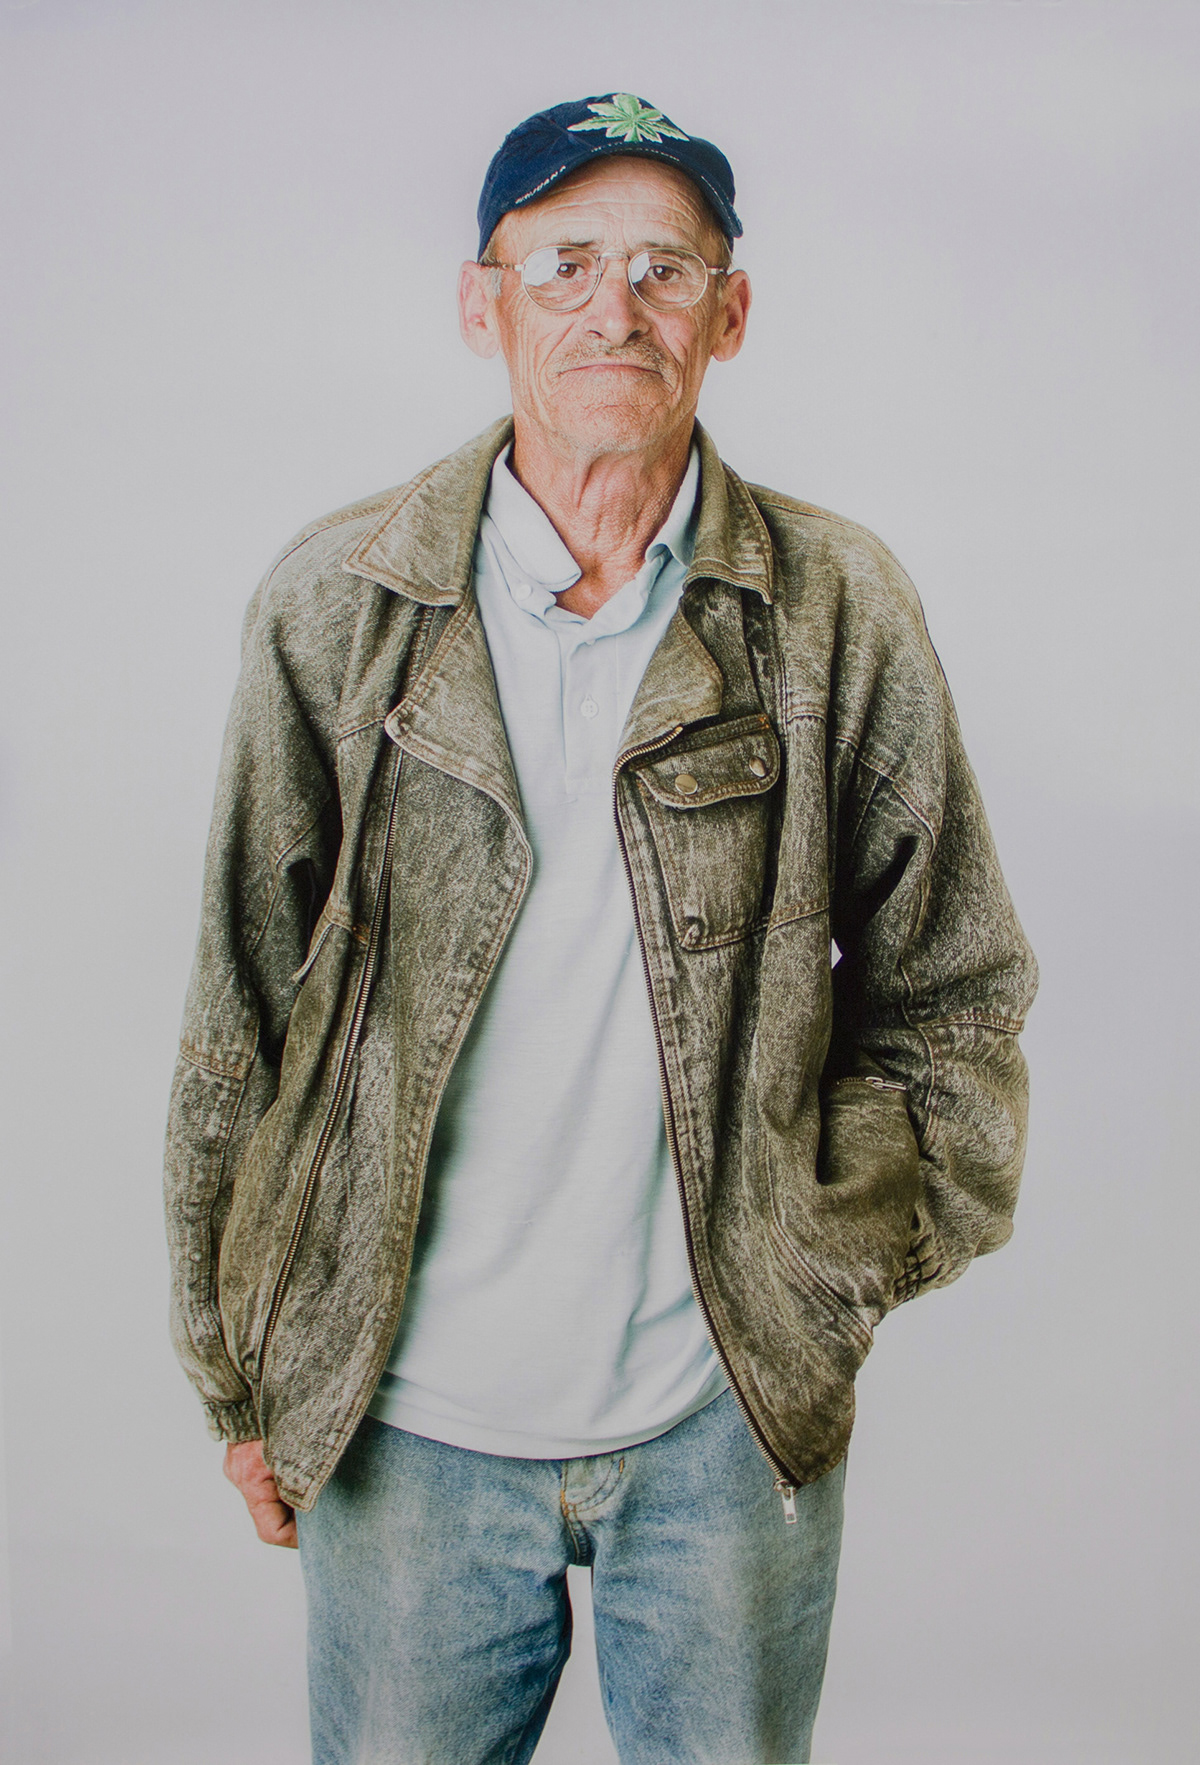 homeless portraits man studio